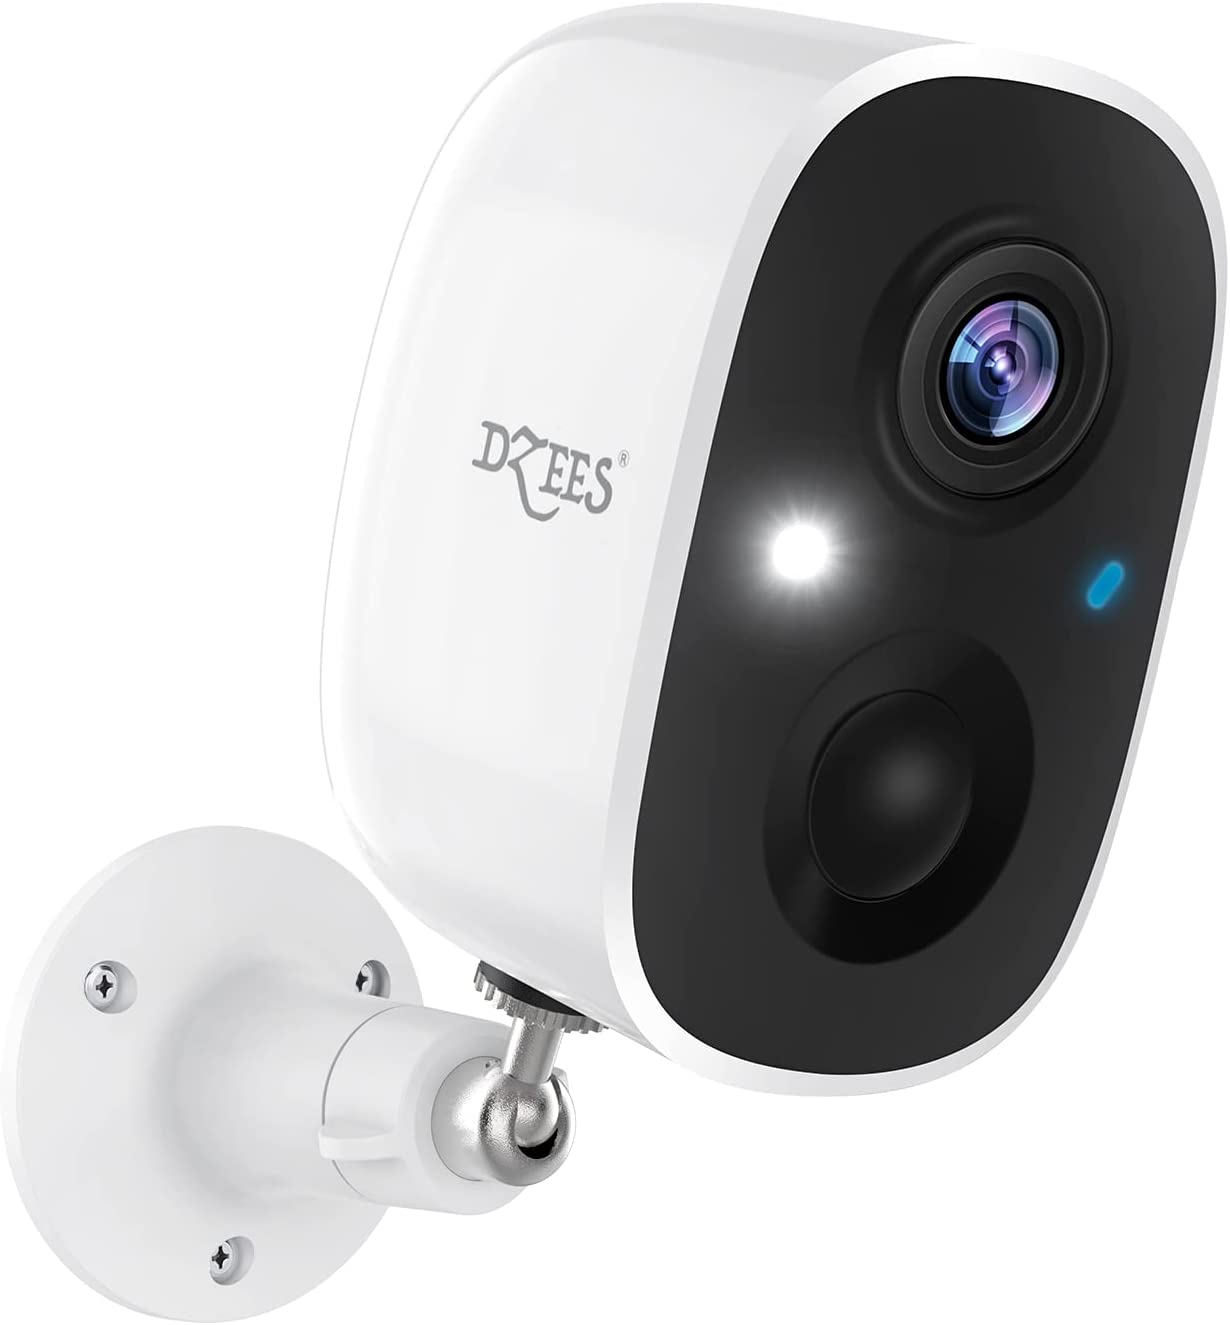  Wireless Security Cameras